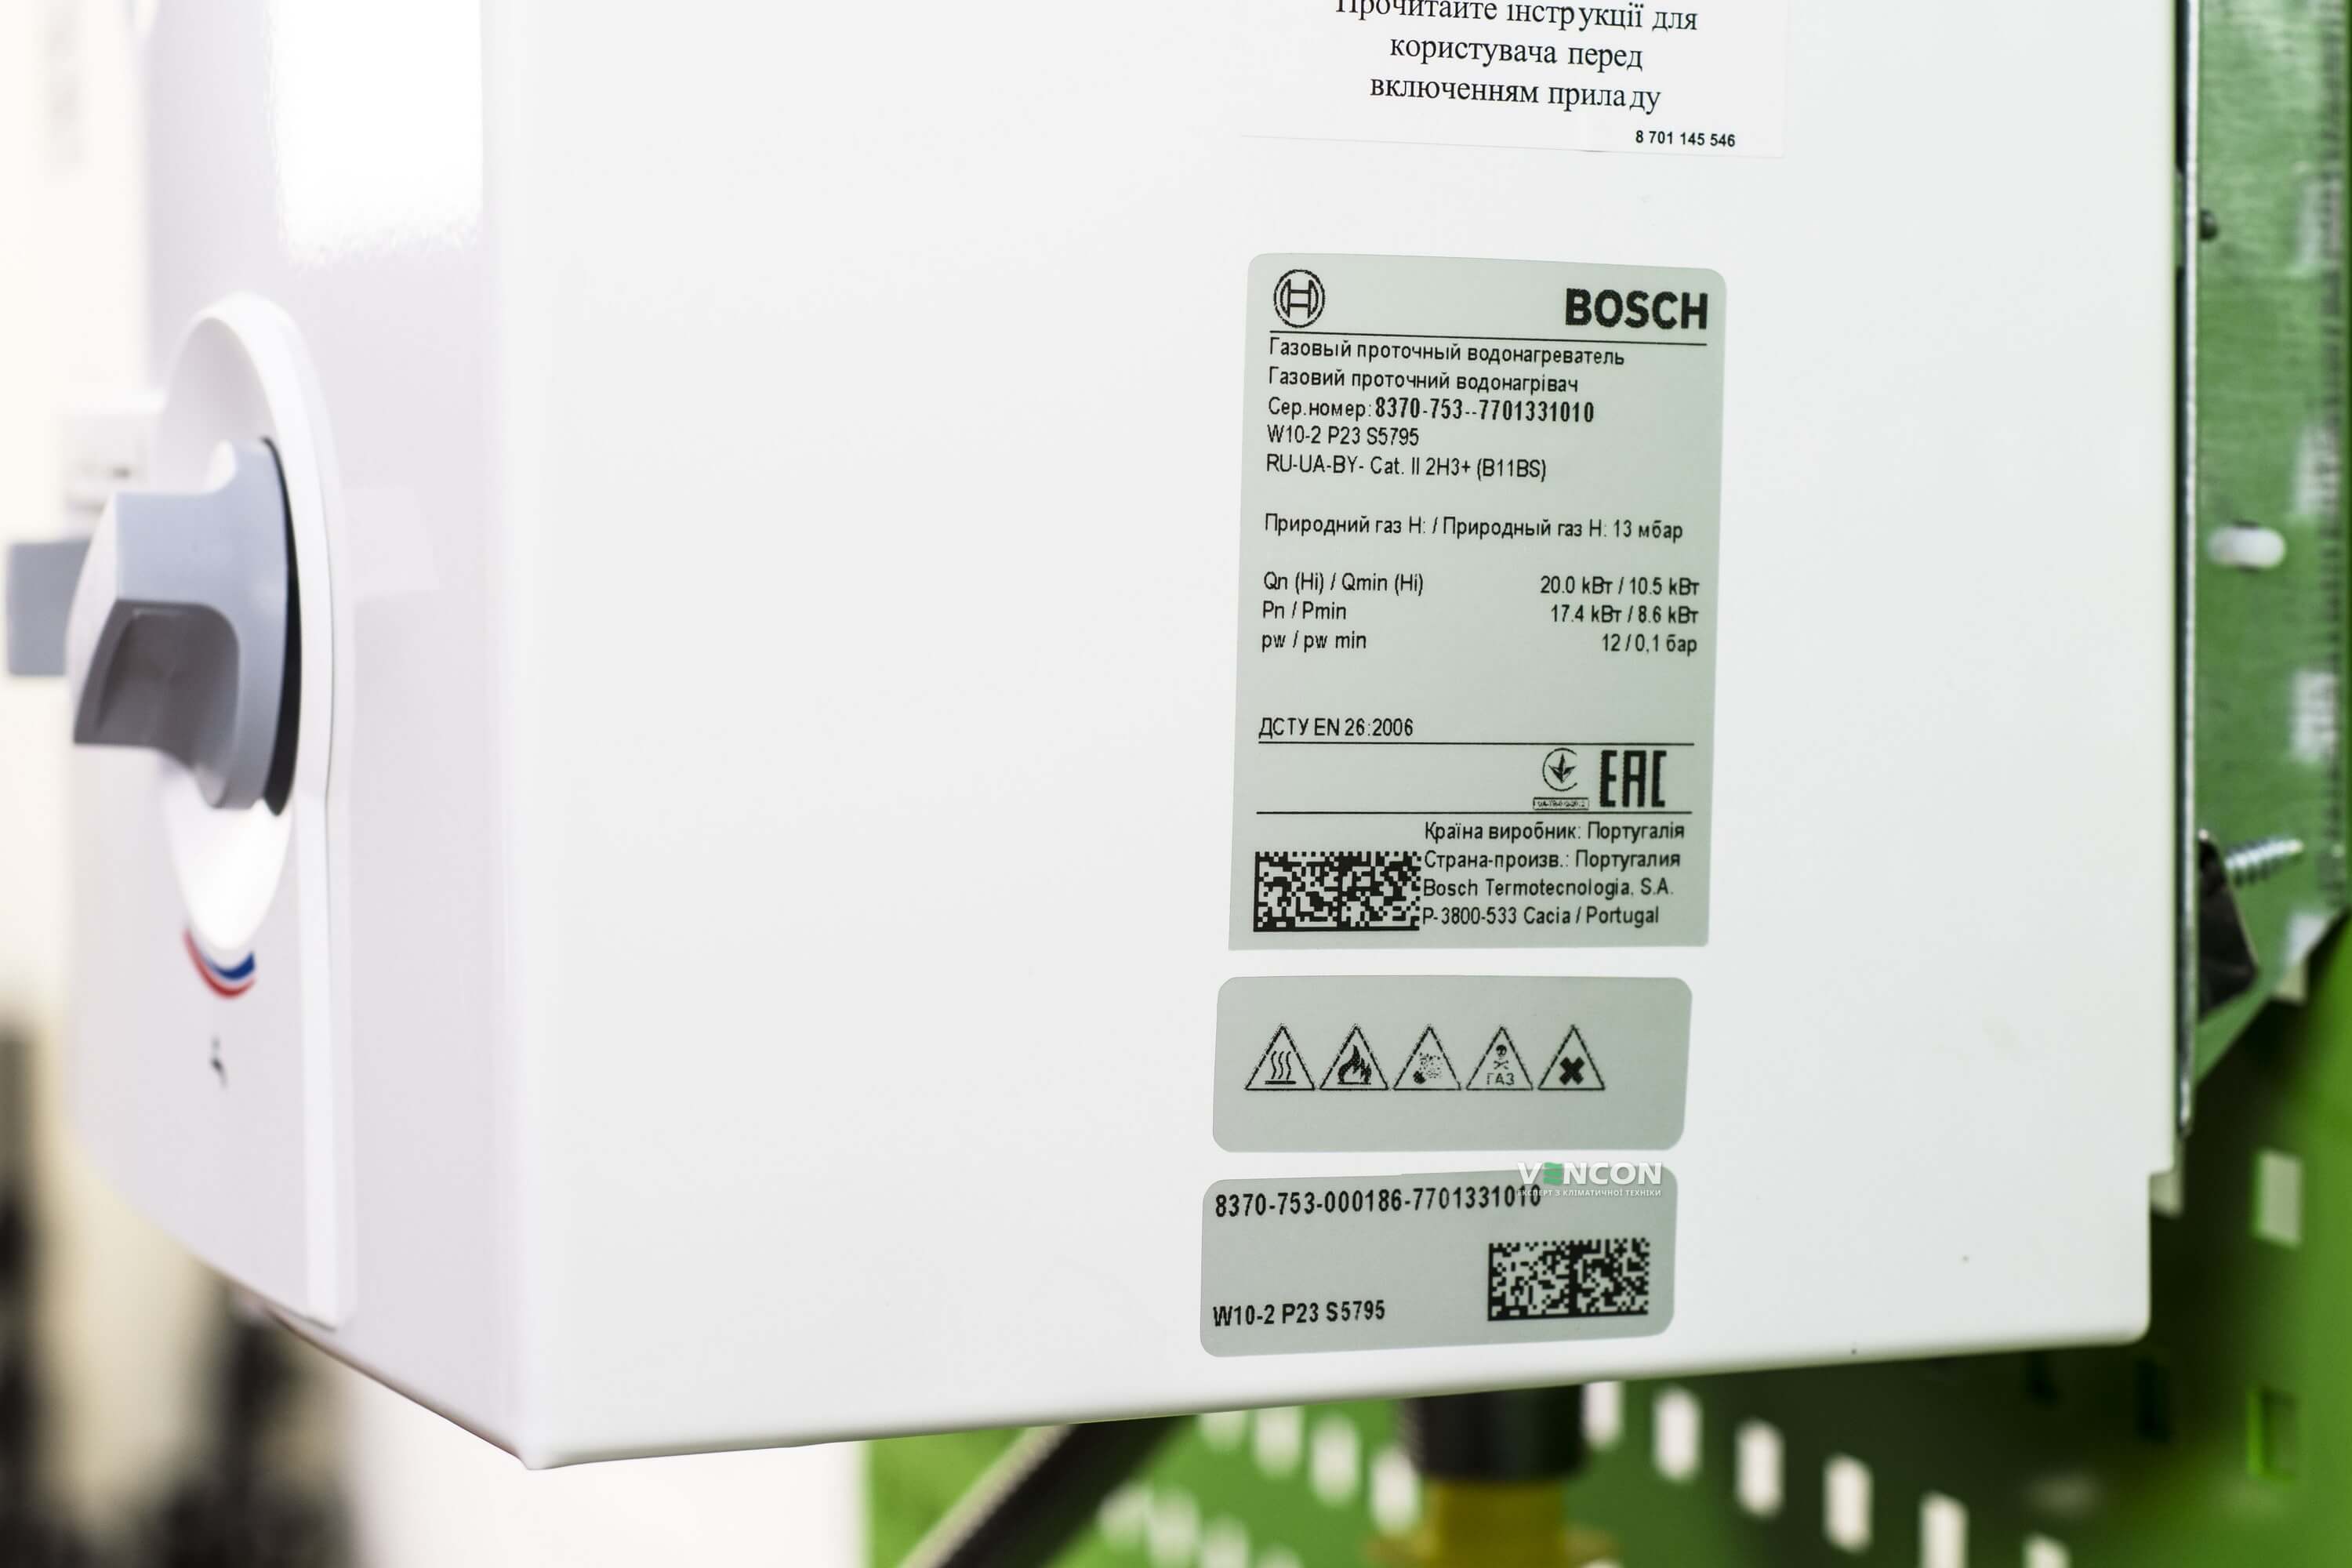 Газовая колонка Bosch Therm 4000 O W 10-2 P (7701331010) характеристики - фотография 7